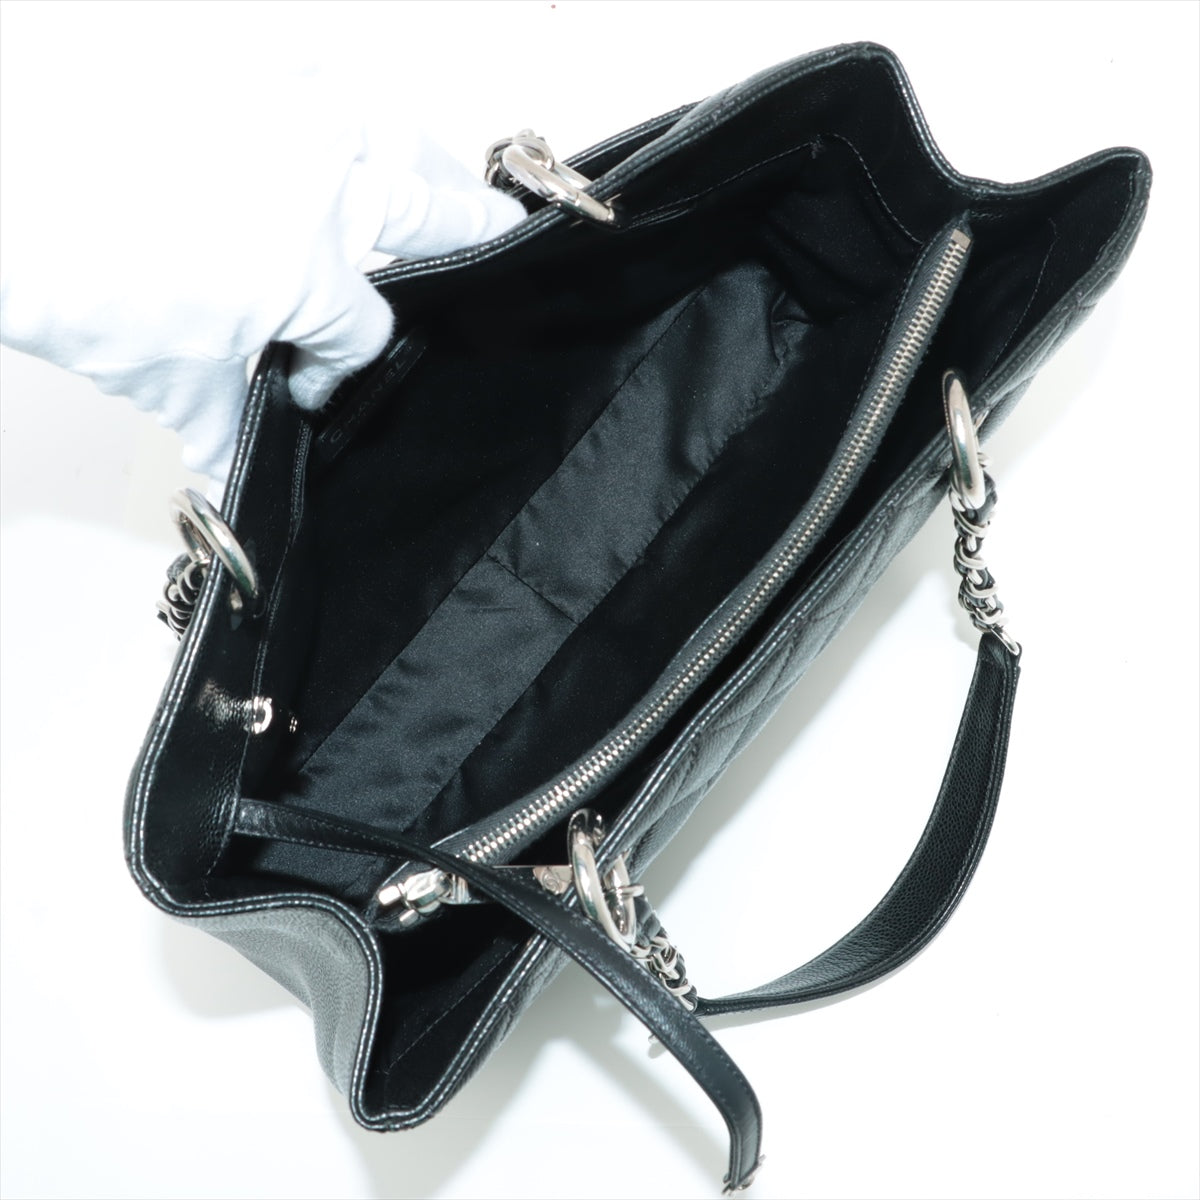 PREORDER! Chanel GST Caviarskin Chain tote bag